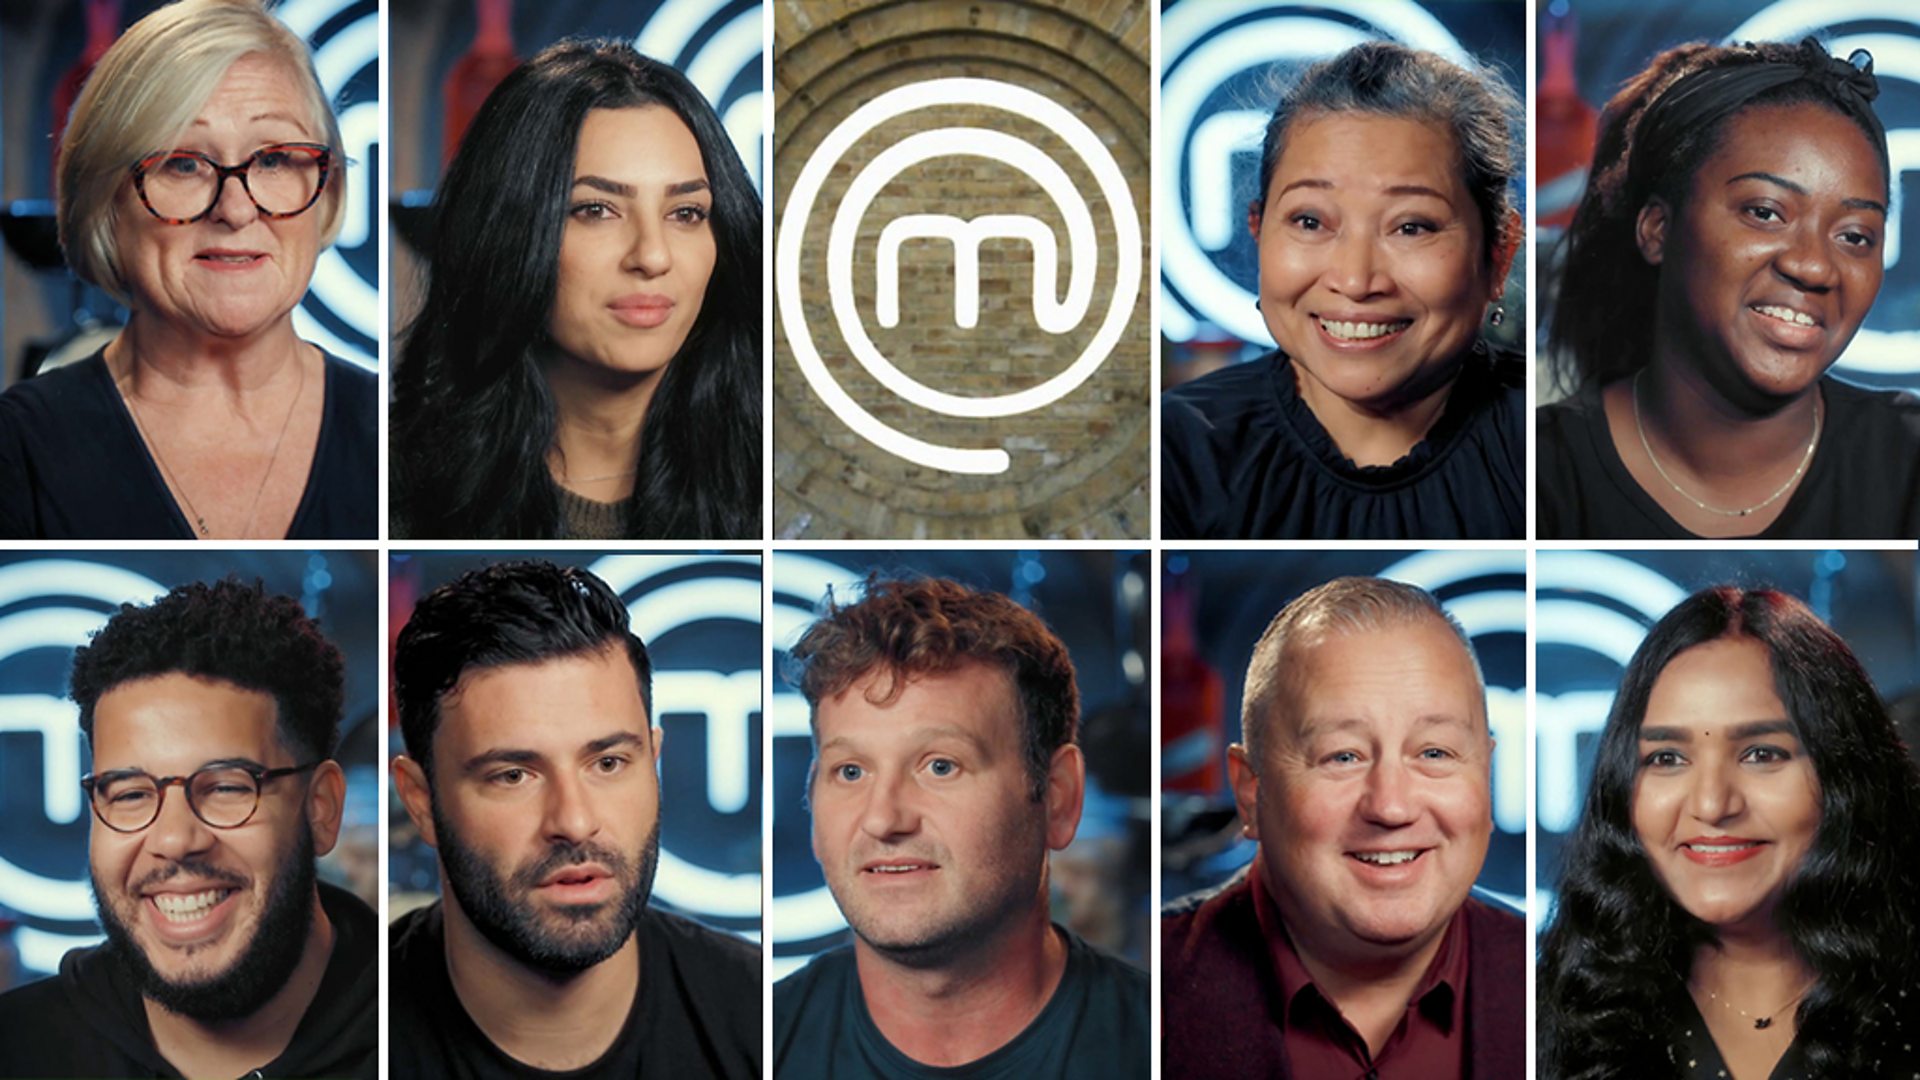 MasterChef US' Season 6 Updates: Meet The Top 5 Remaining